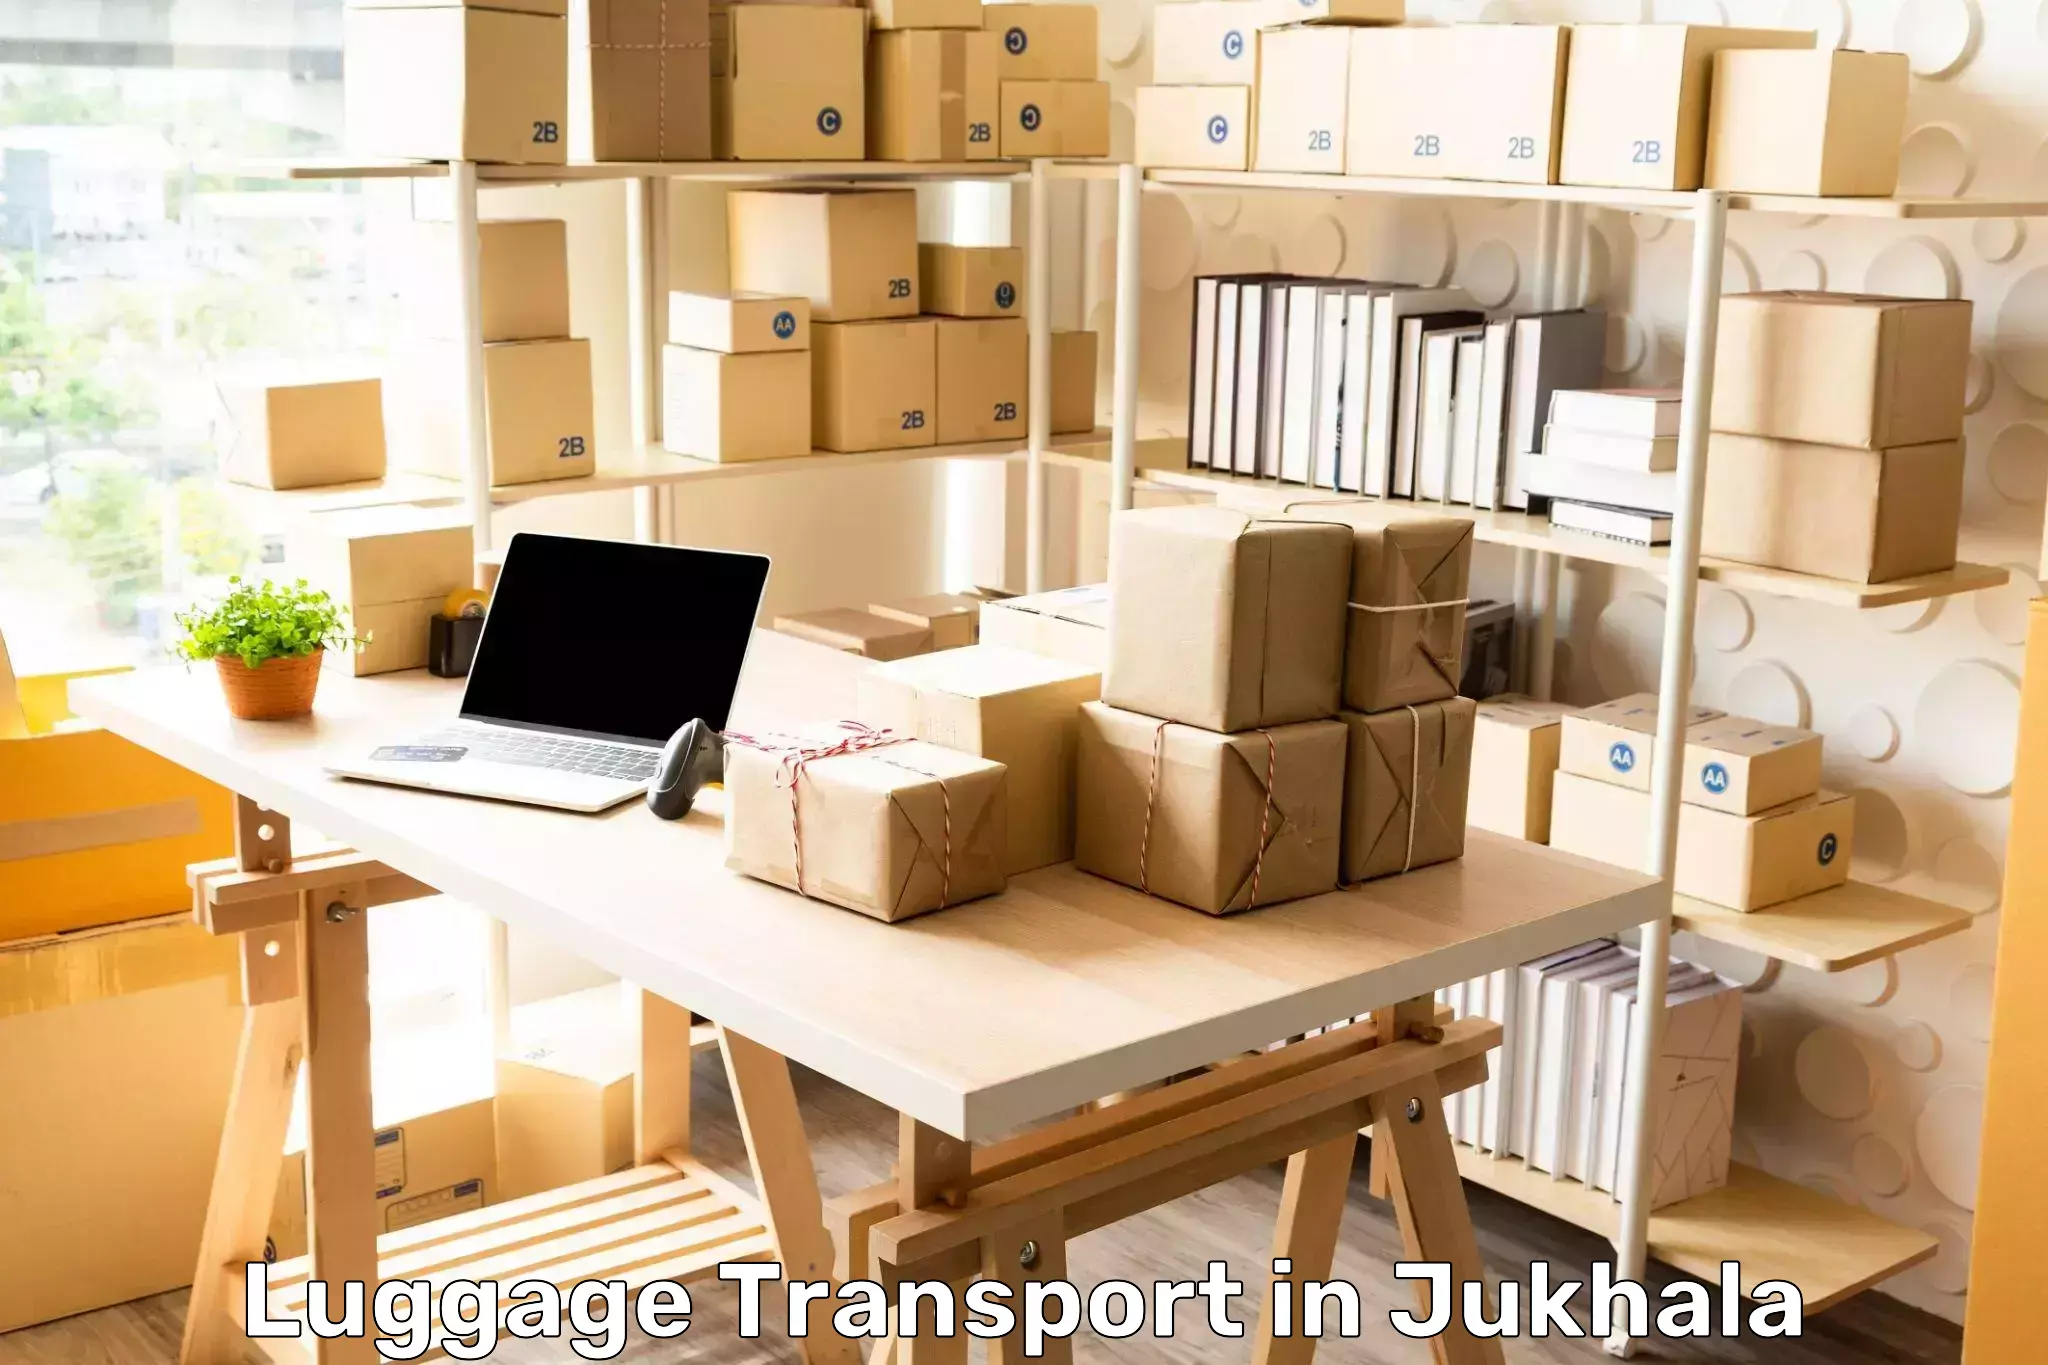 Luggage shipment processing in Jukhala